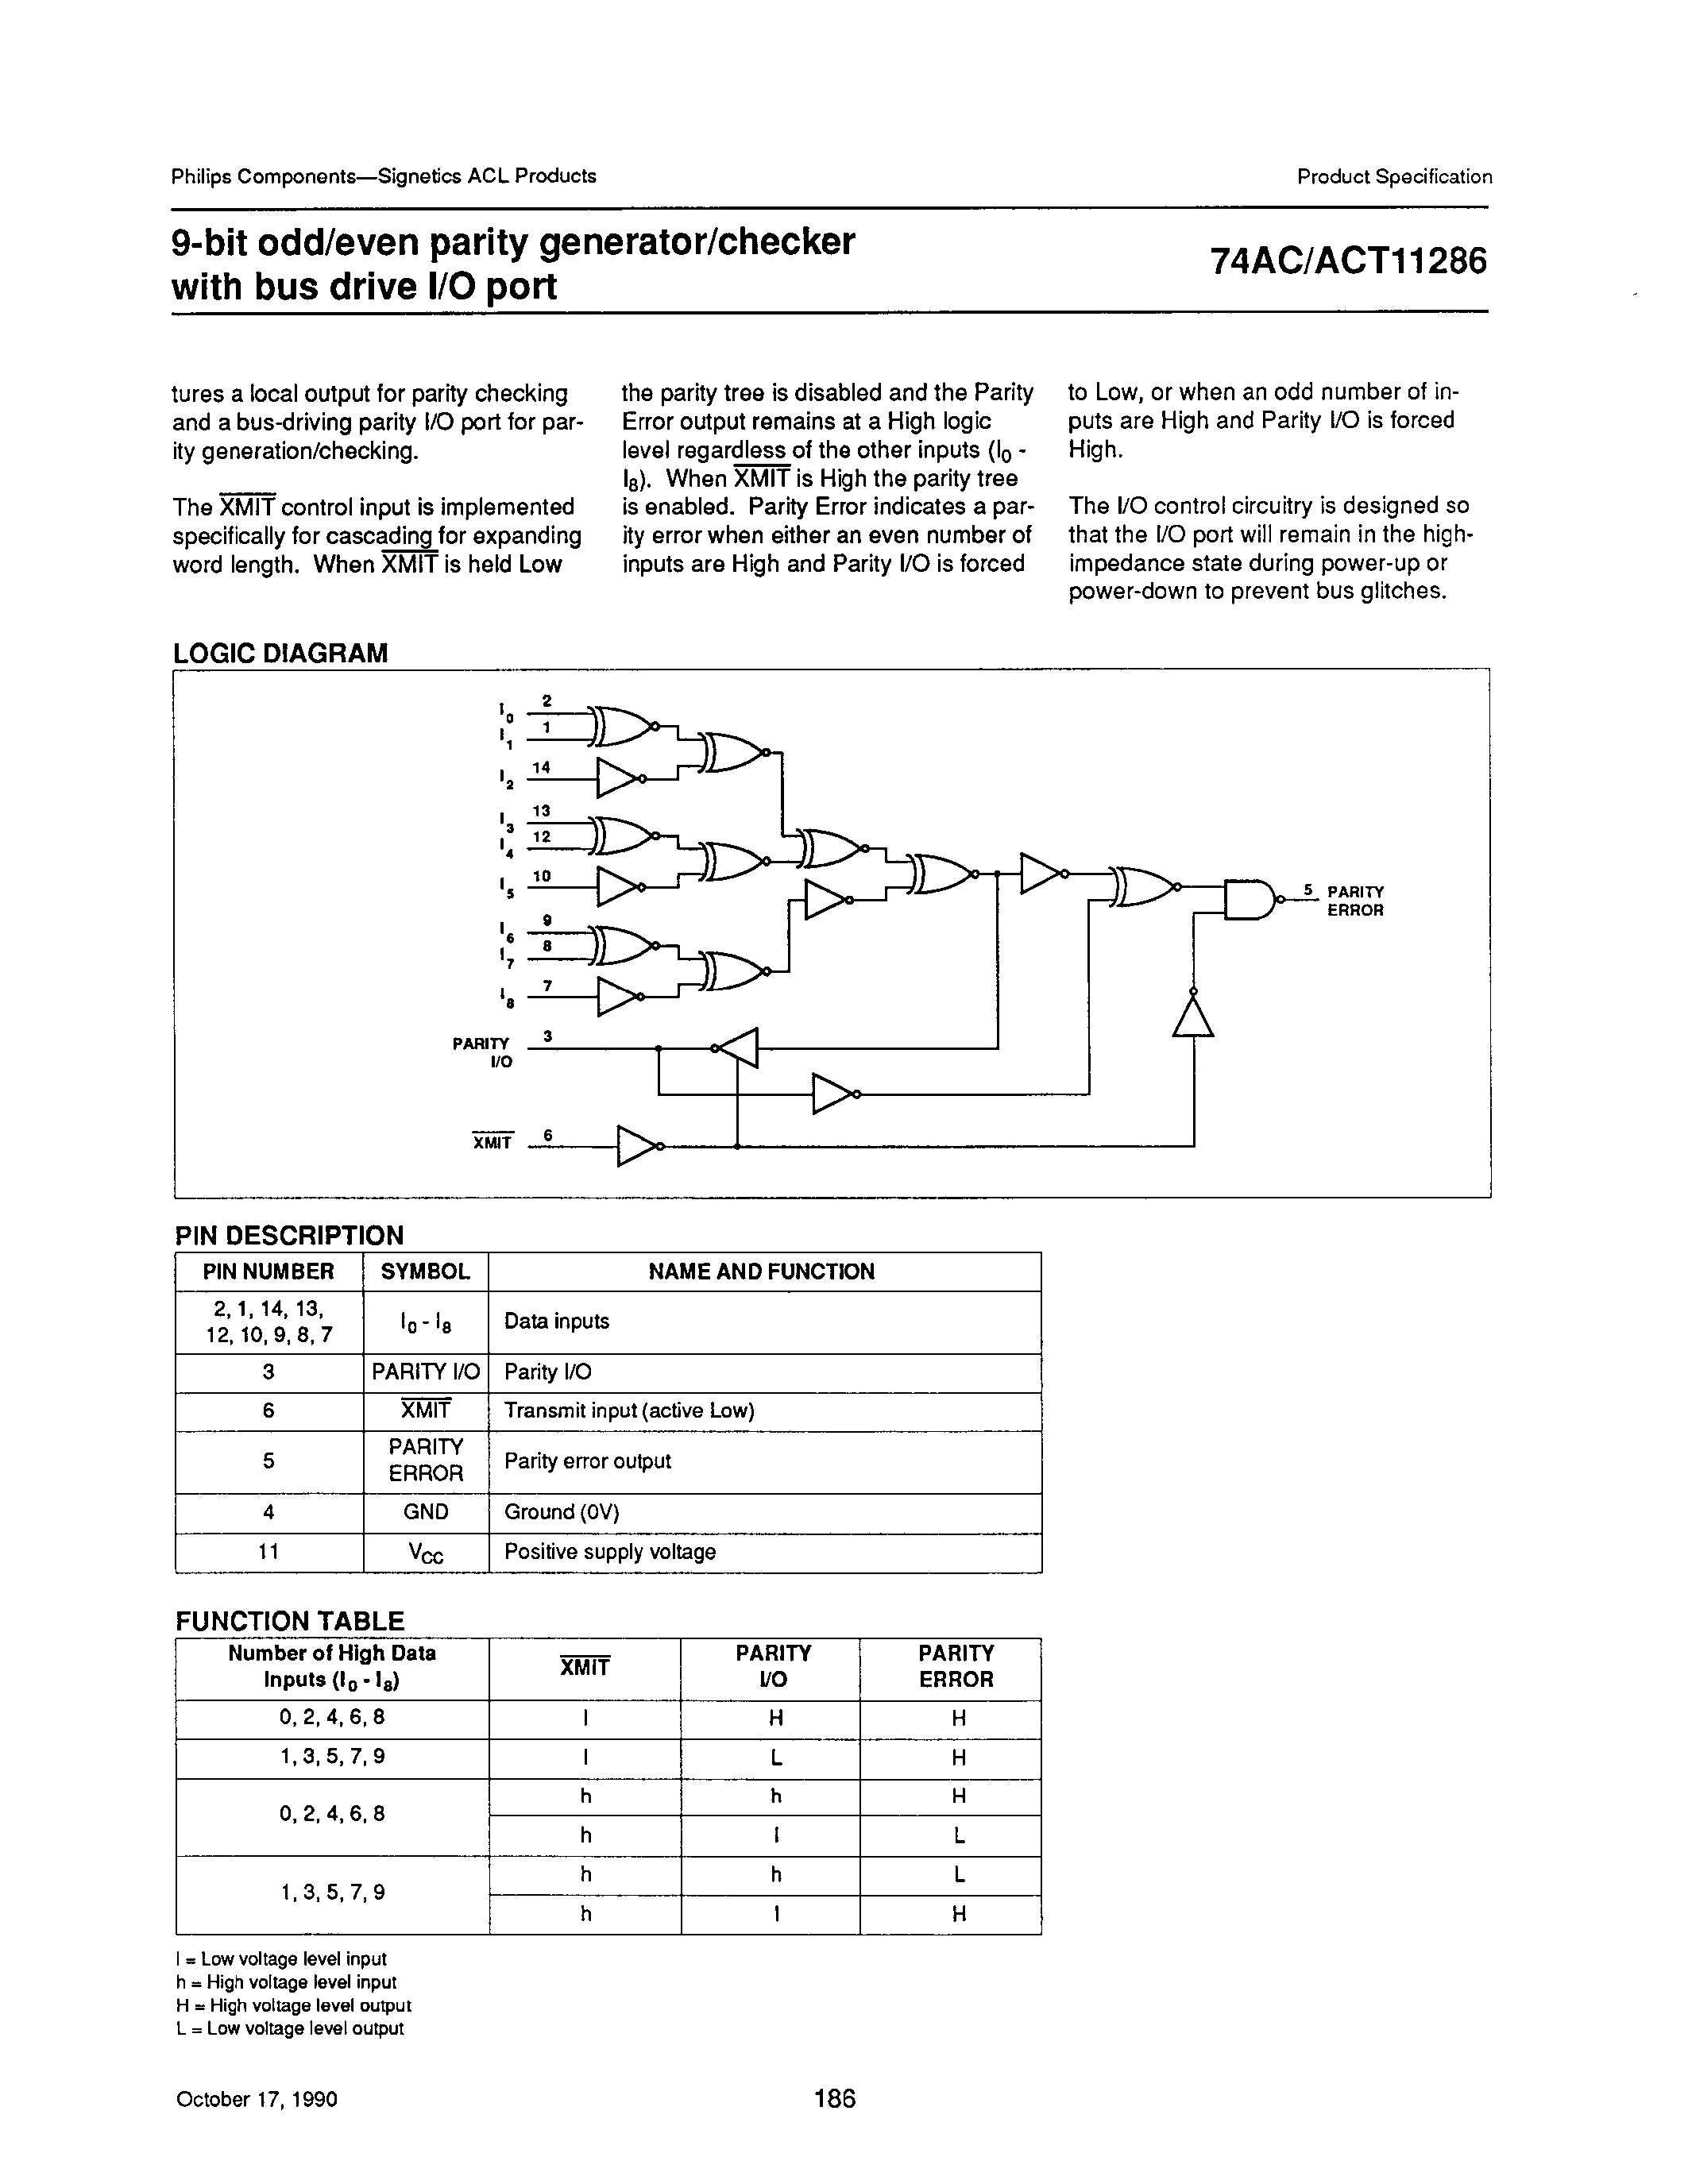 Datasheet 74AC11286 - 9-bit odd/even parity generator/checker with bus drive l/O port page 2